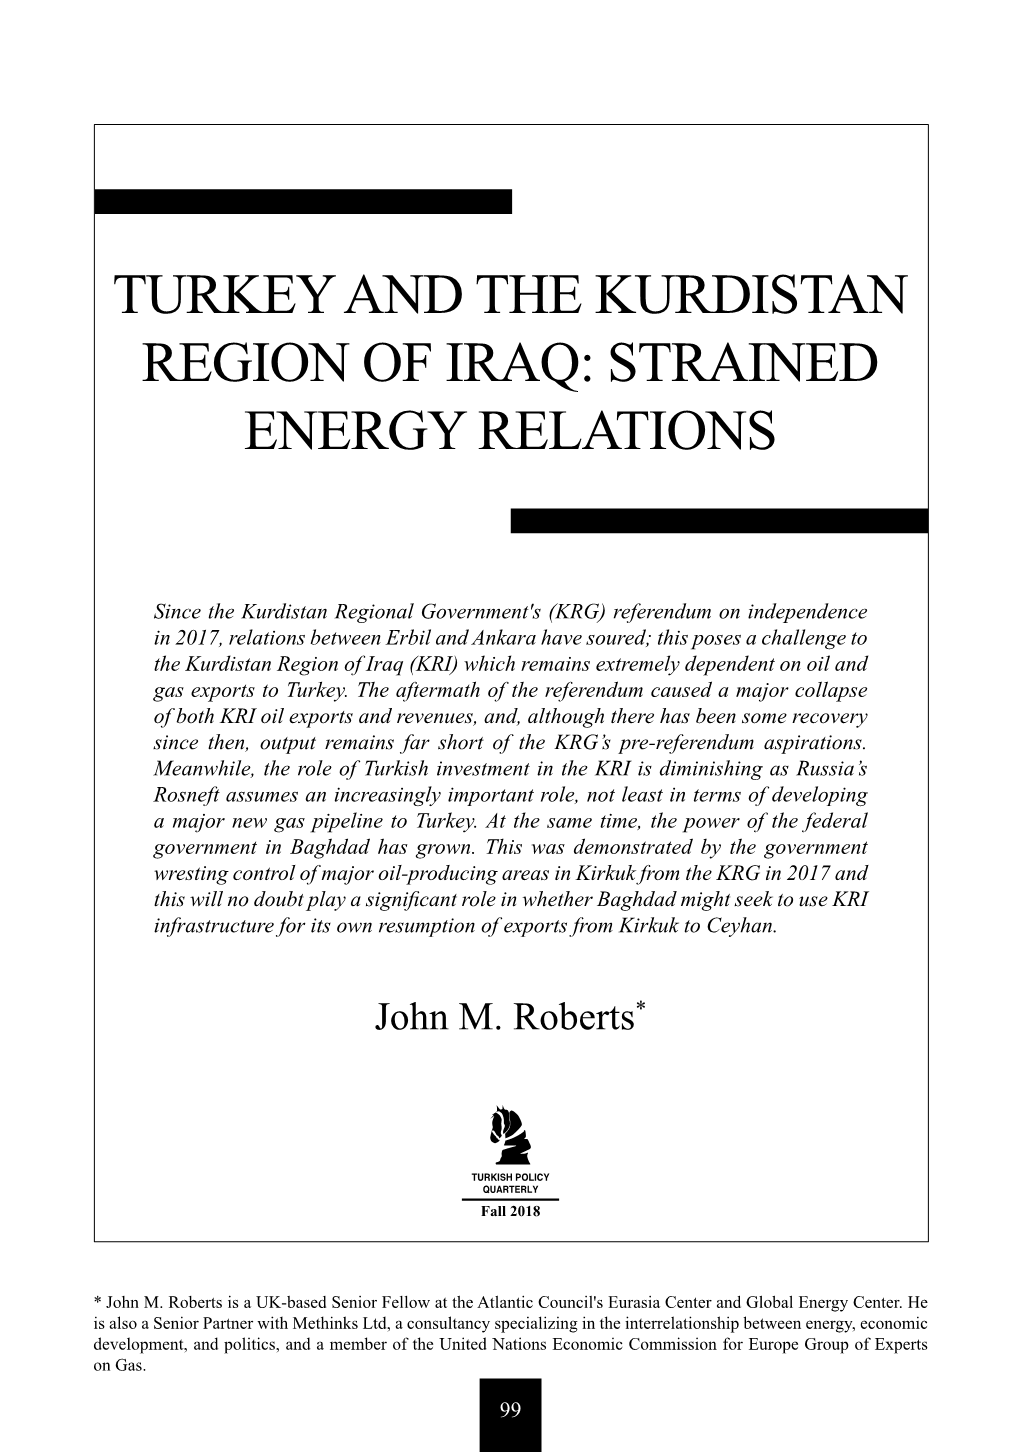 Turkey and the Kurdistan Region of Iraq: Strained Energy Relations